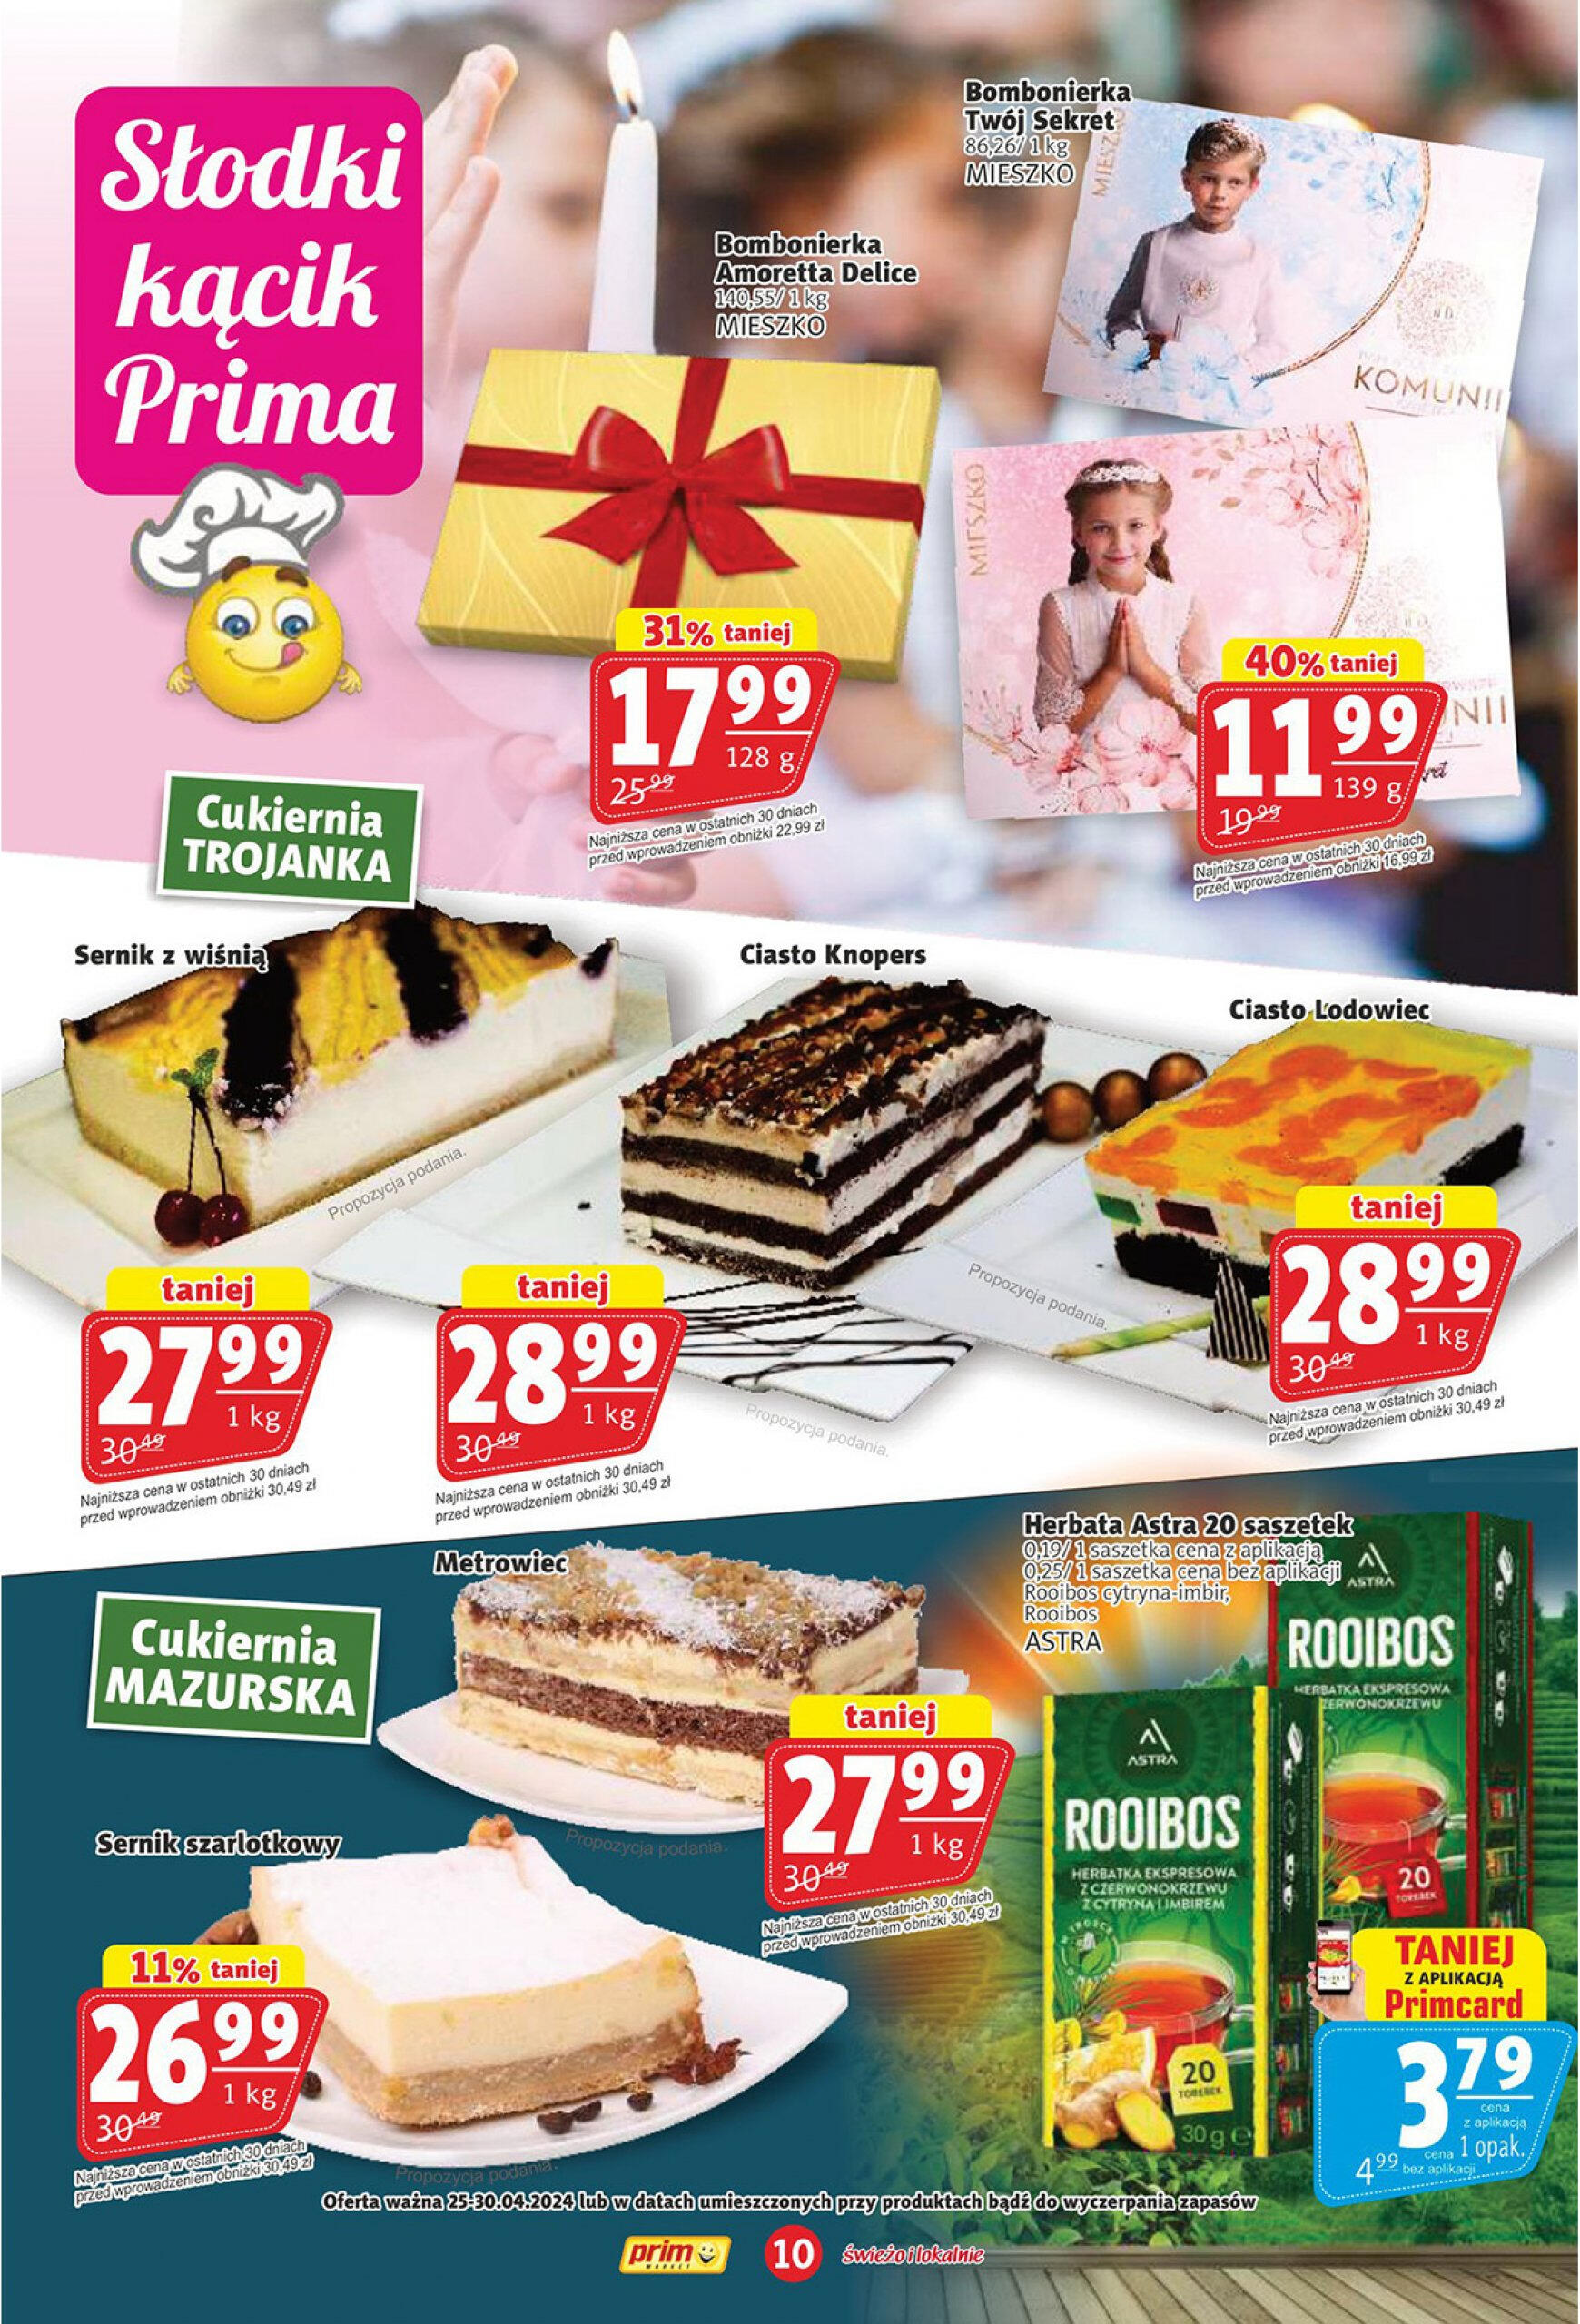 prim-market - Prim Market gazetka aktualna ważna od 25.04. - 30.04. - page: 10